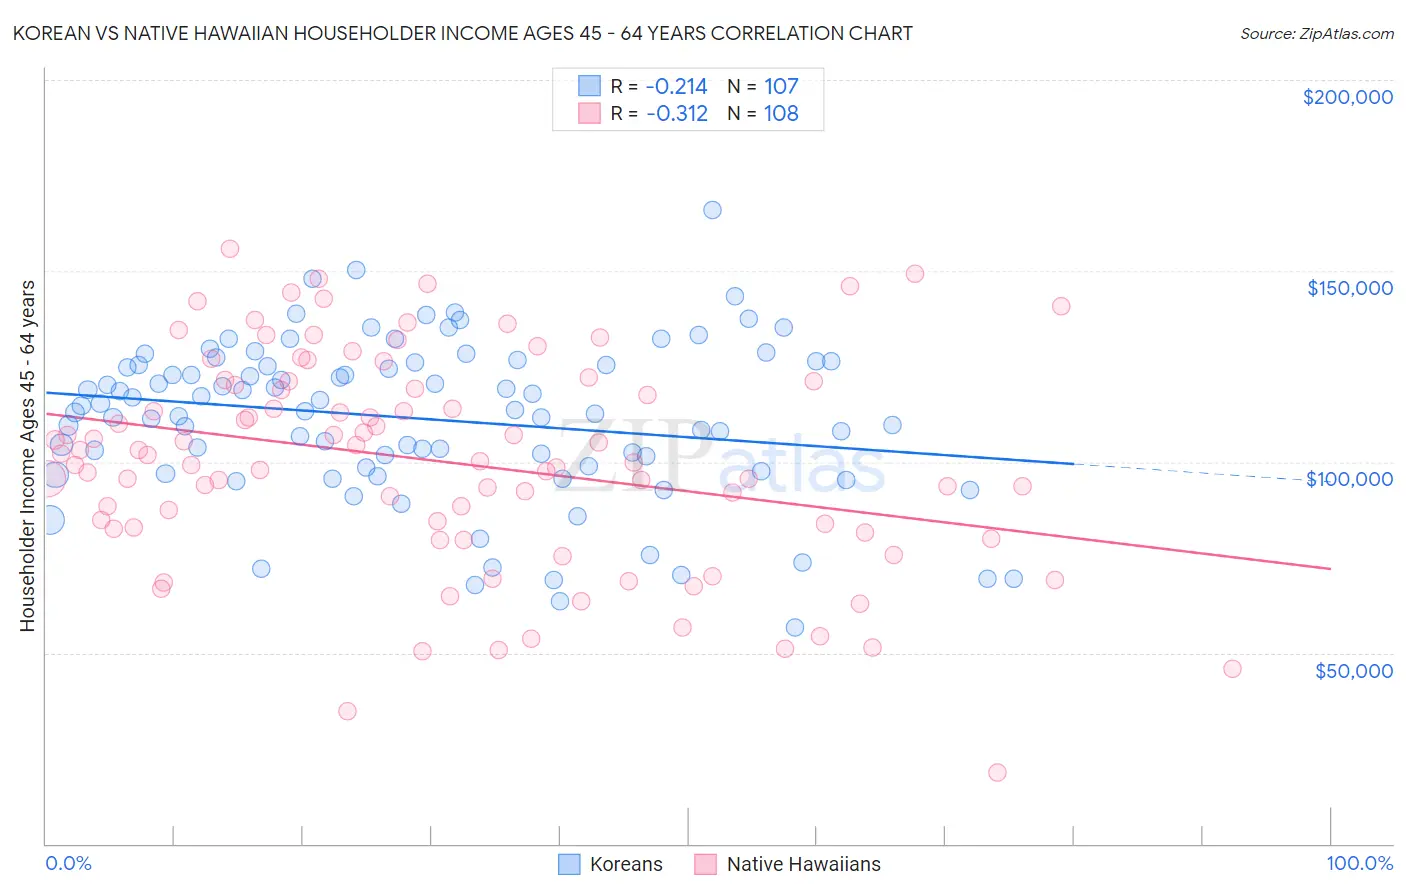 Korean vs Native Hawaiian Householder Income Ages 45 - 64 years